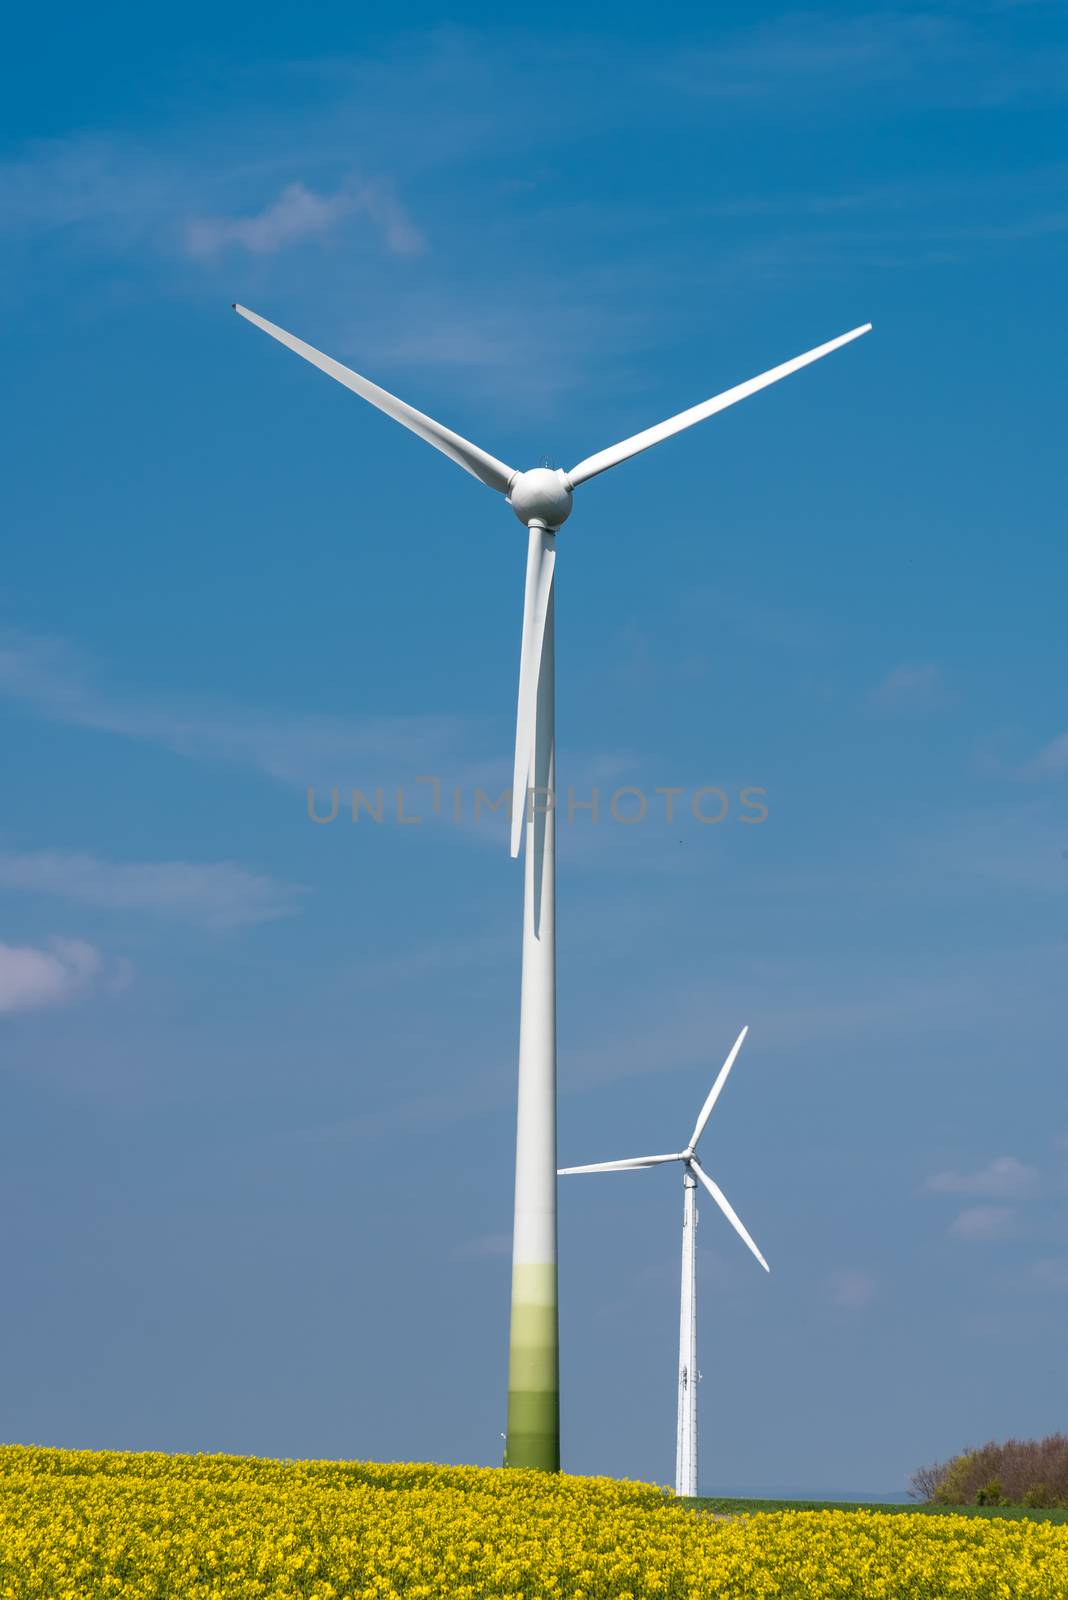 Wind-turbines in a blooming rapeseed field seen in Germany